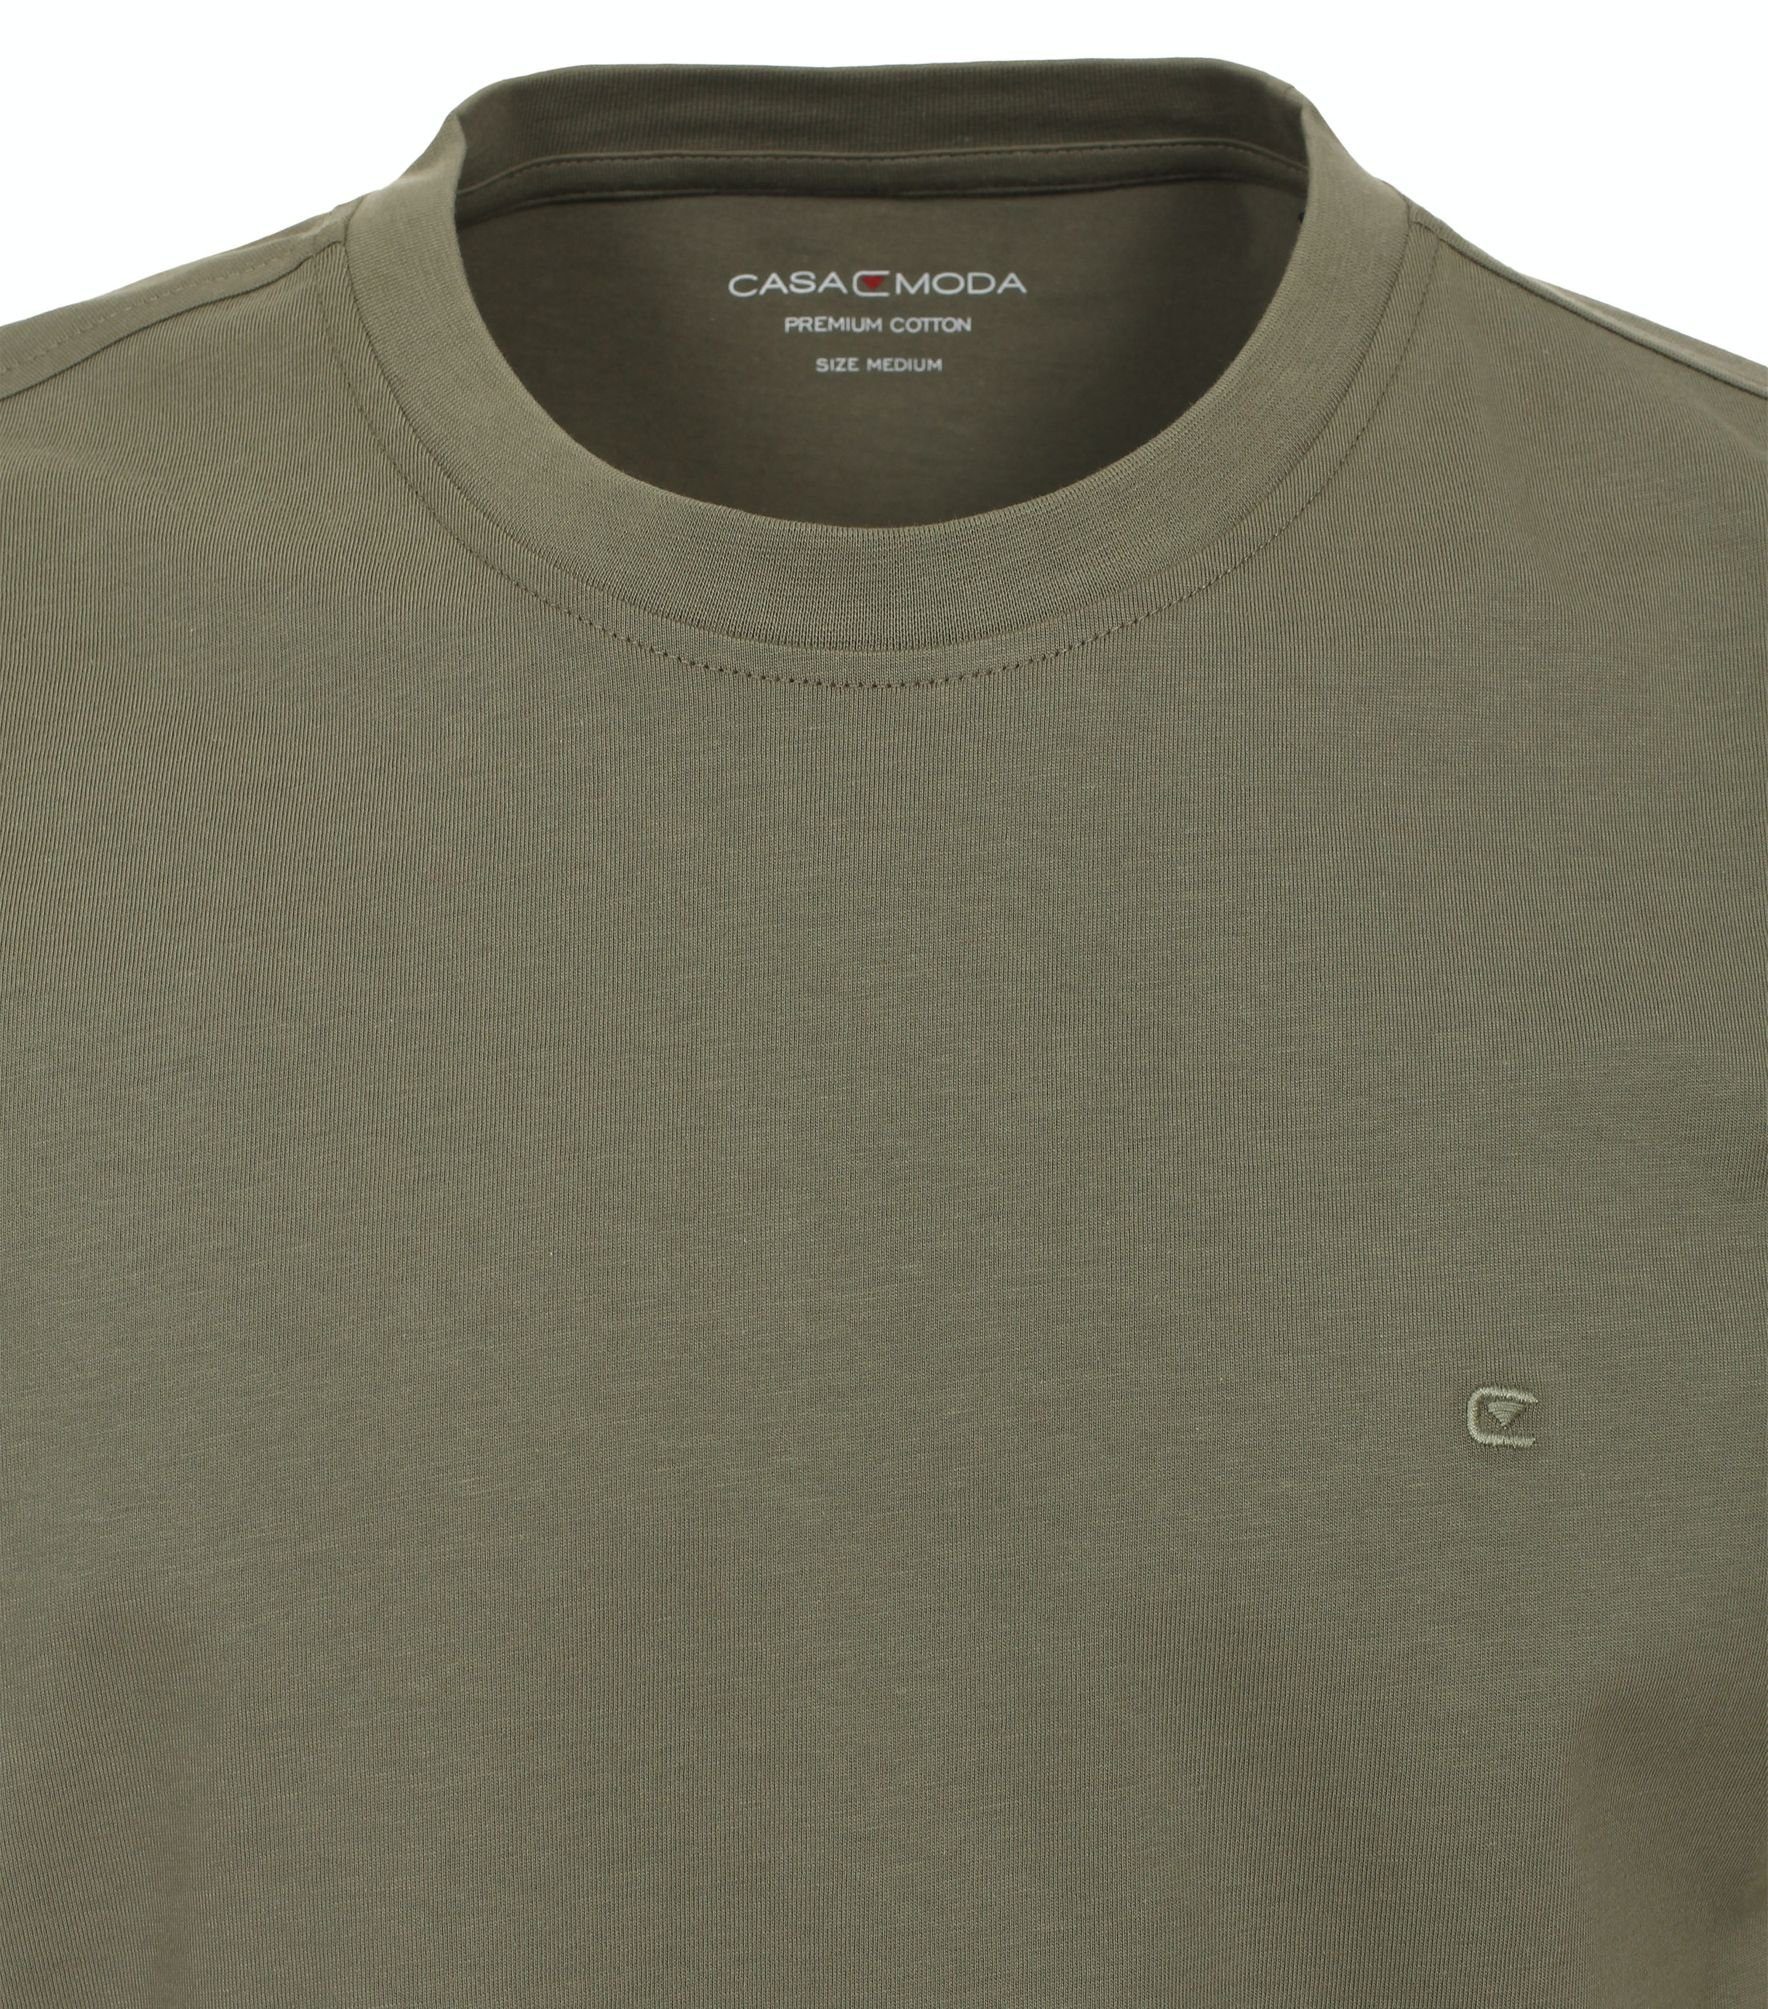 CASAMODA T-Shirt T-Shirt 004200 grün unifarben (336)